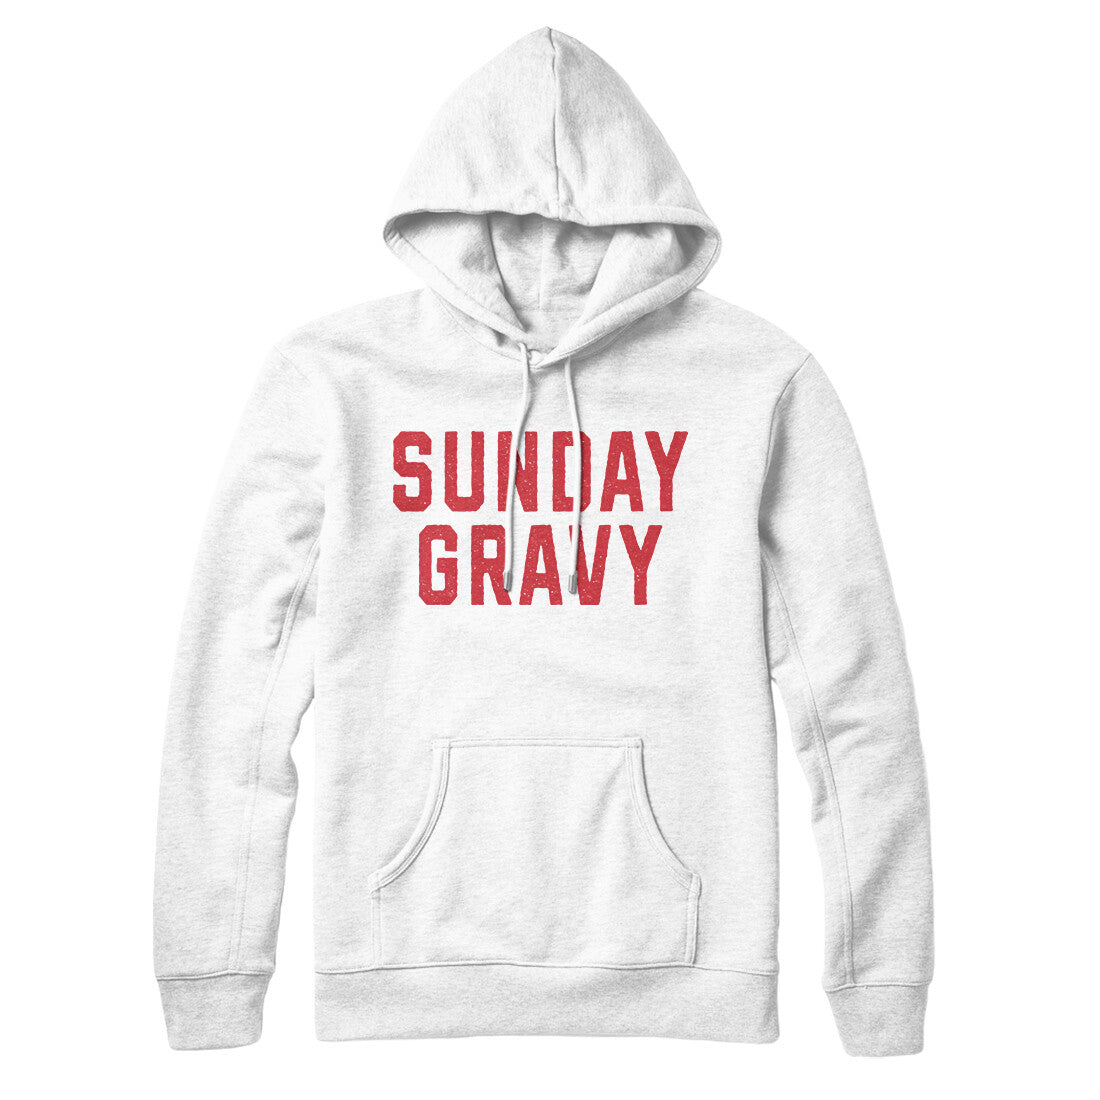 Sunday Gravy in White Color